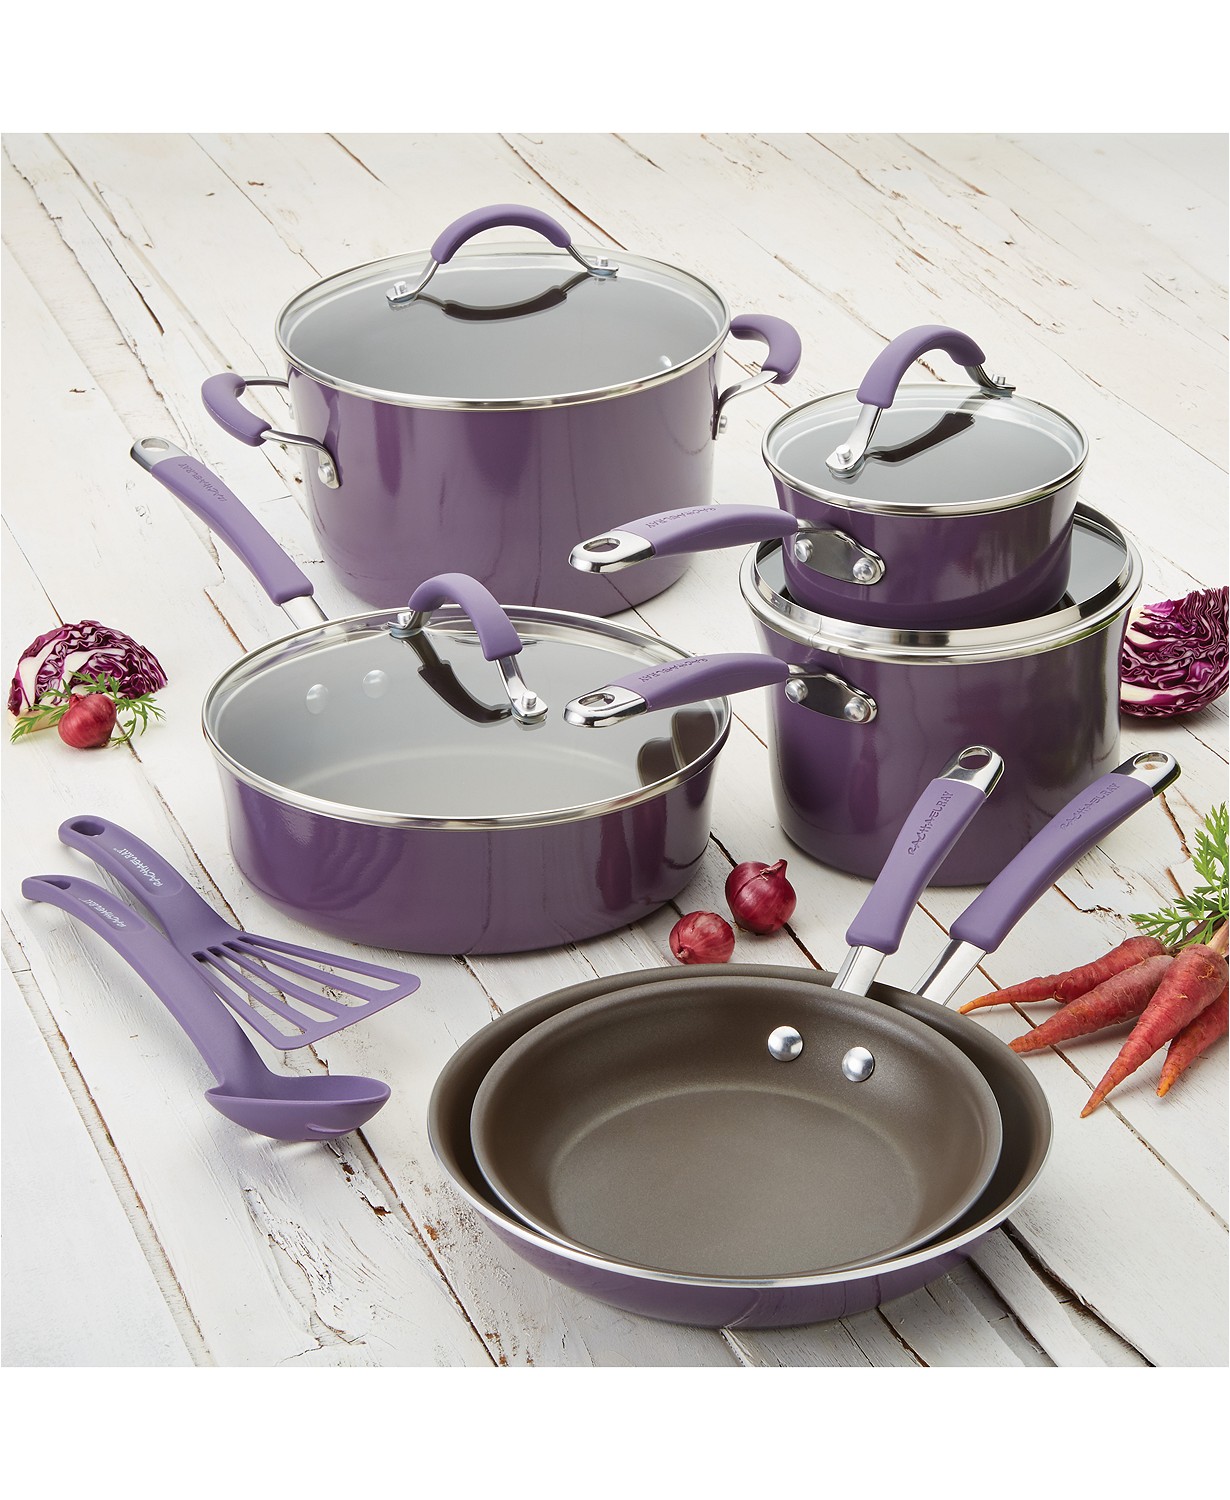 https://www.rachaelrayshow.com/sites/default/files/images/2021-04/rachael-ray-lavender-cookware-set.jpg